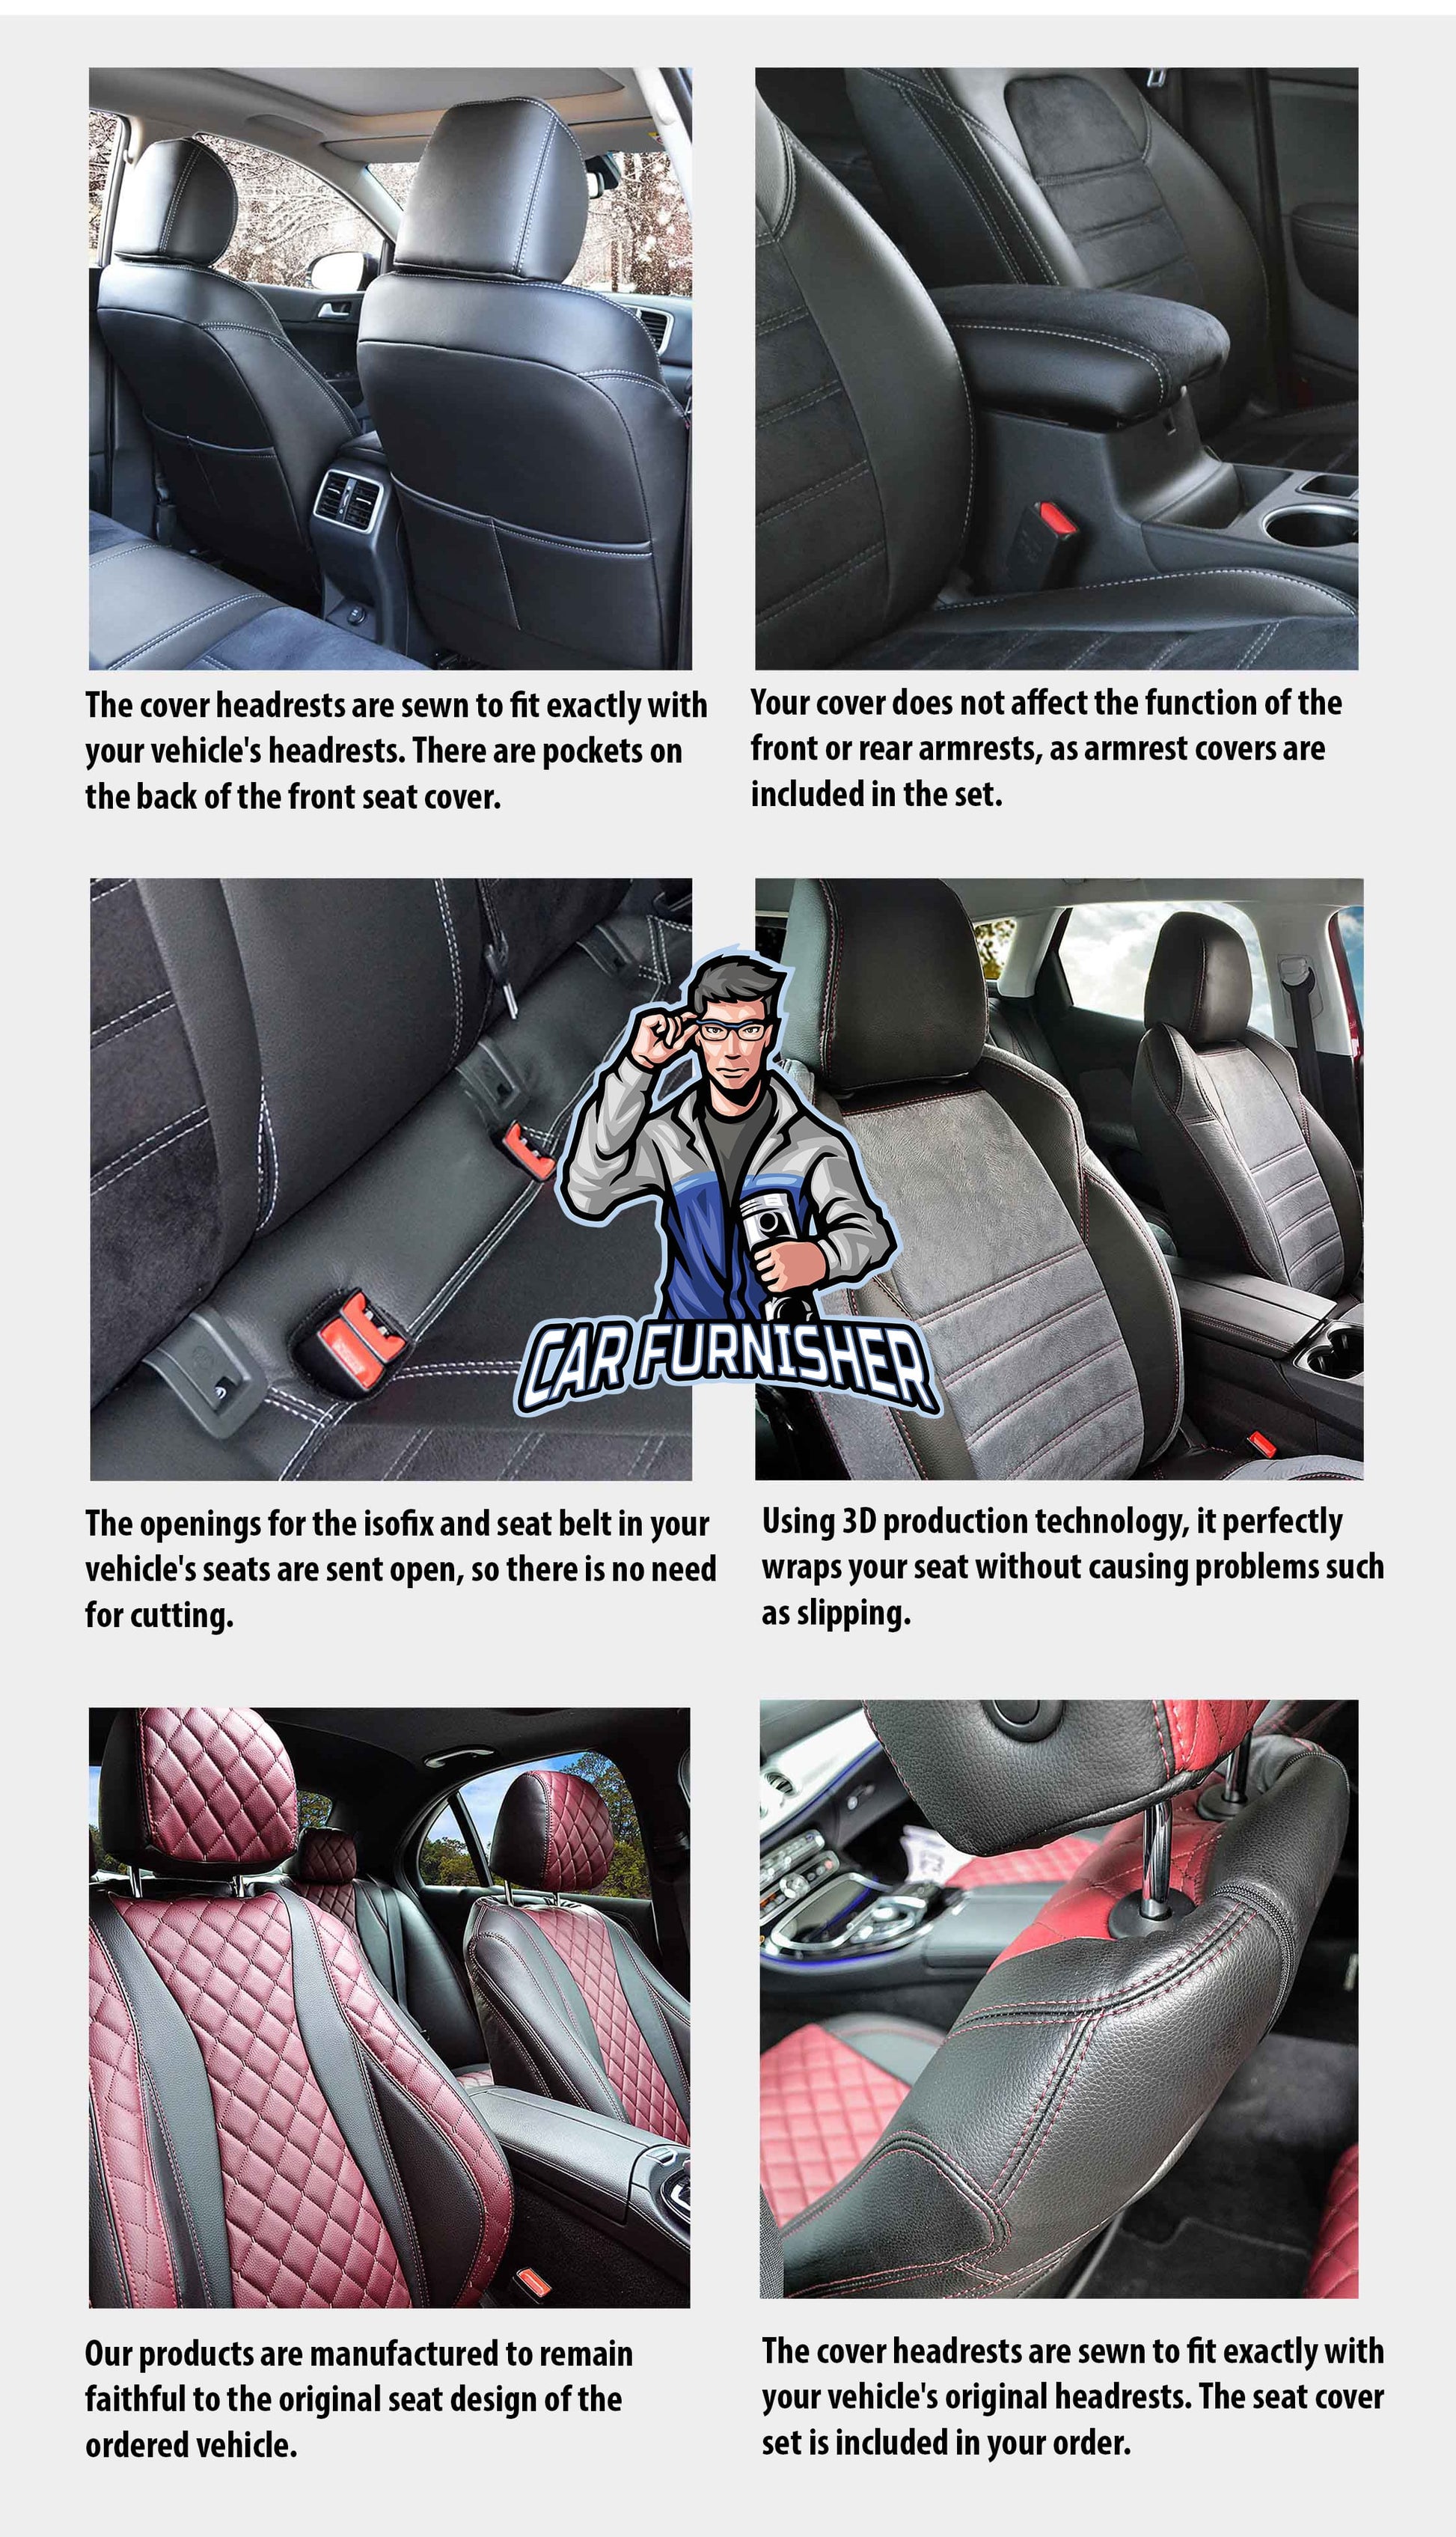 Toyota Rav4 Seat Cover Amsterdam Leather Design Black Leather